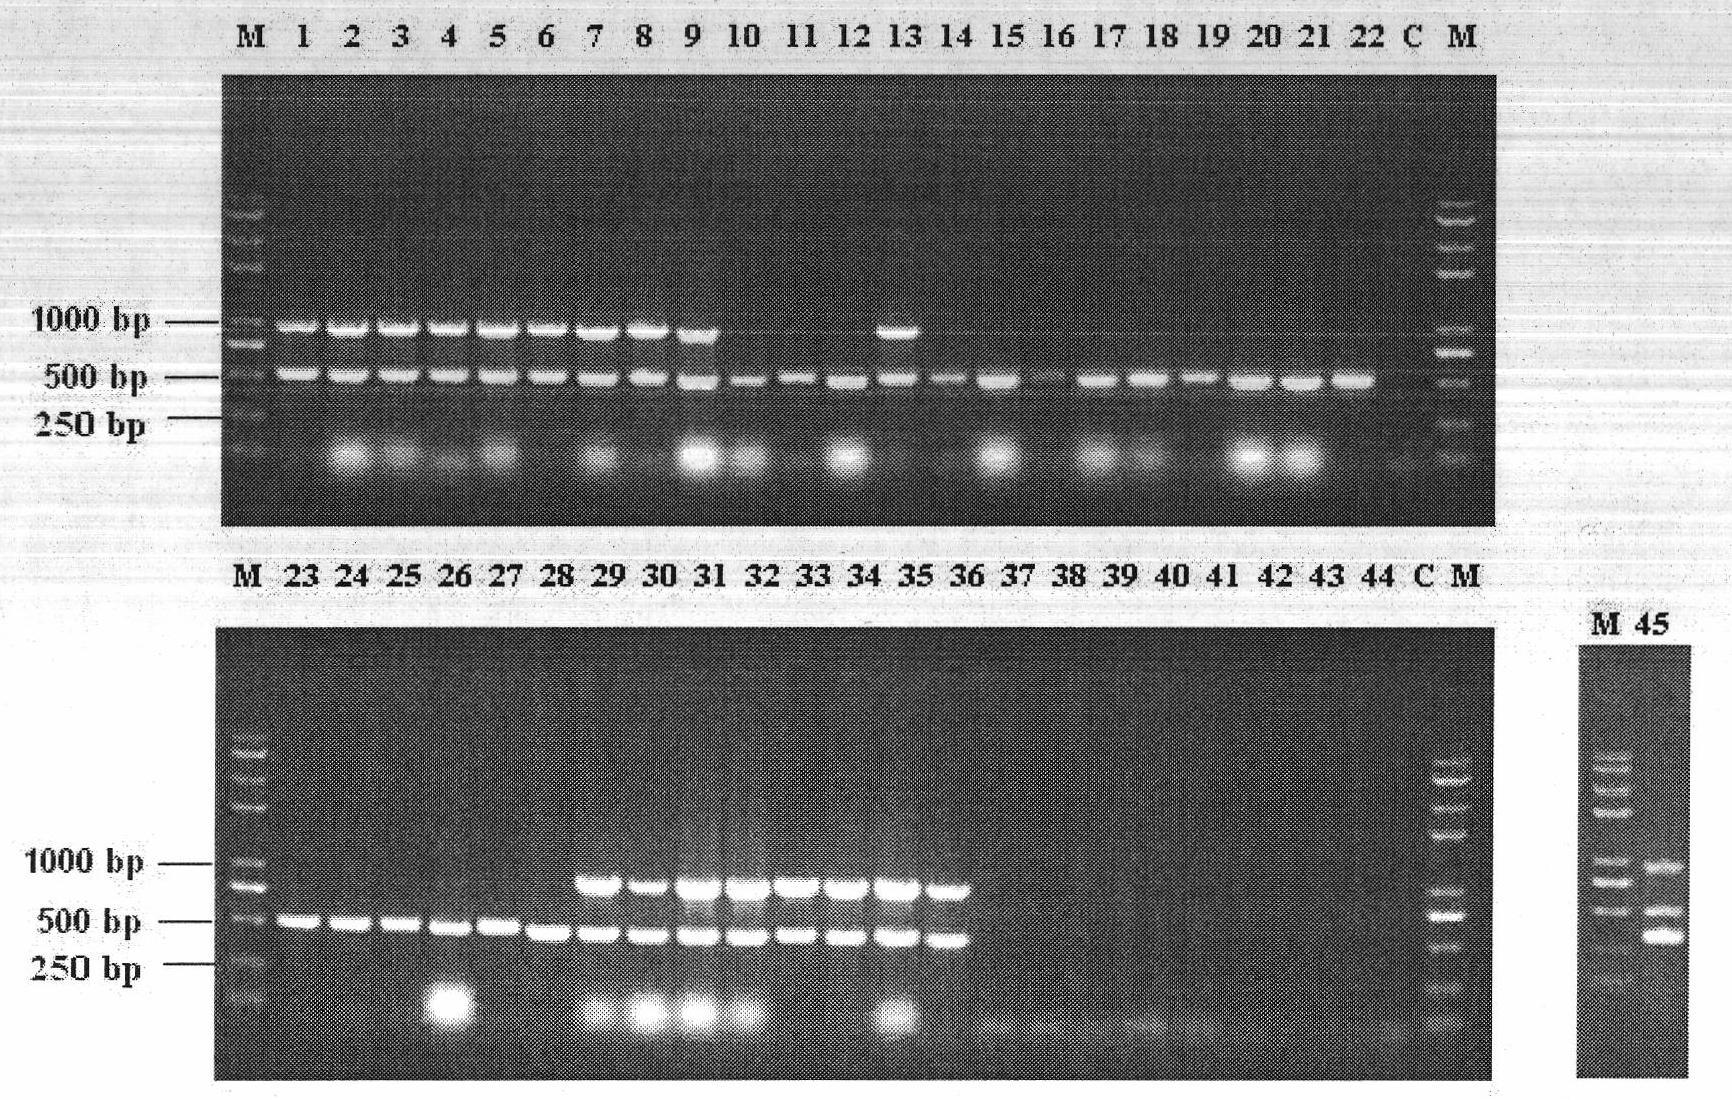 Primer sequences for detecting Edwardsiella tarda, Edwardsiella ictarda or pathogenic Edwardsiella tarda, and detection method and application thereof